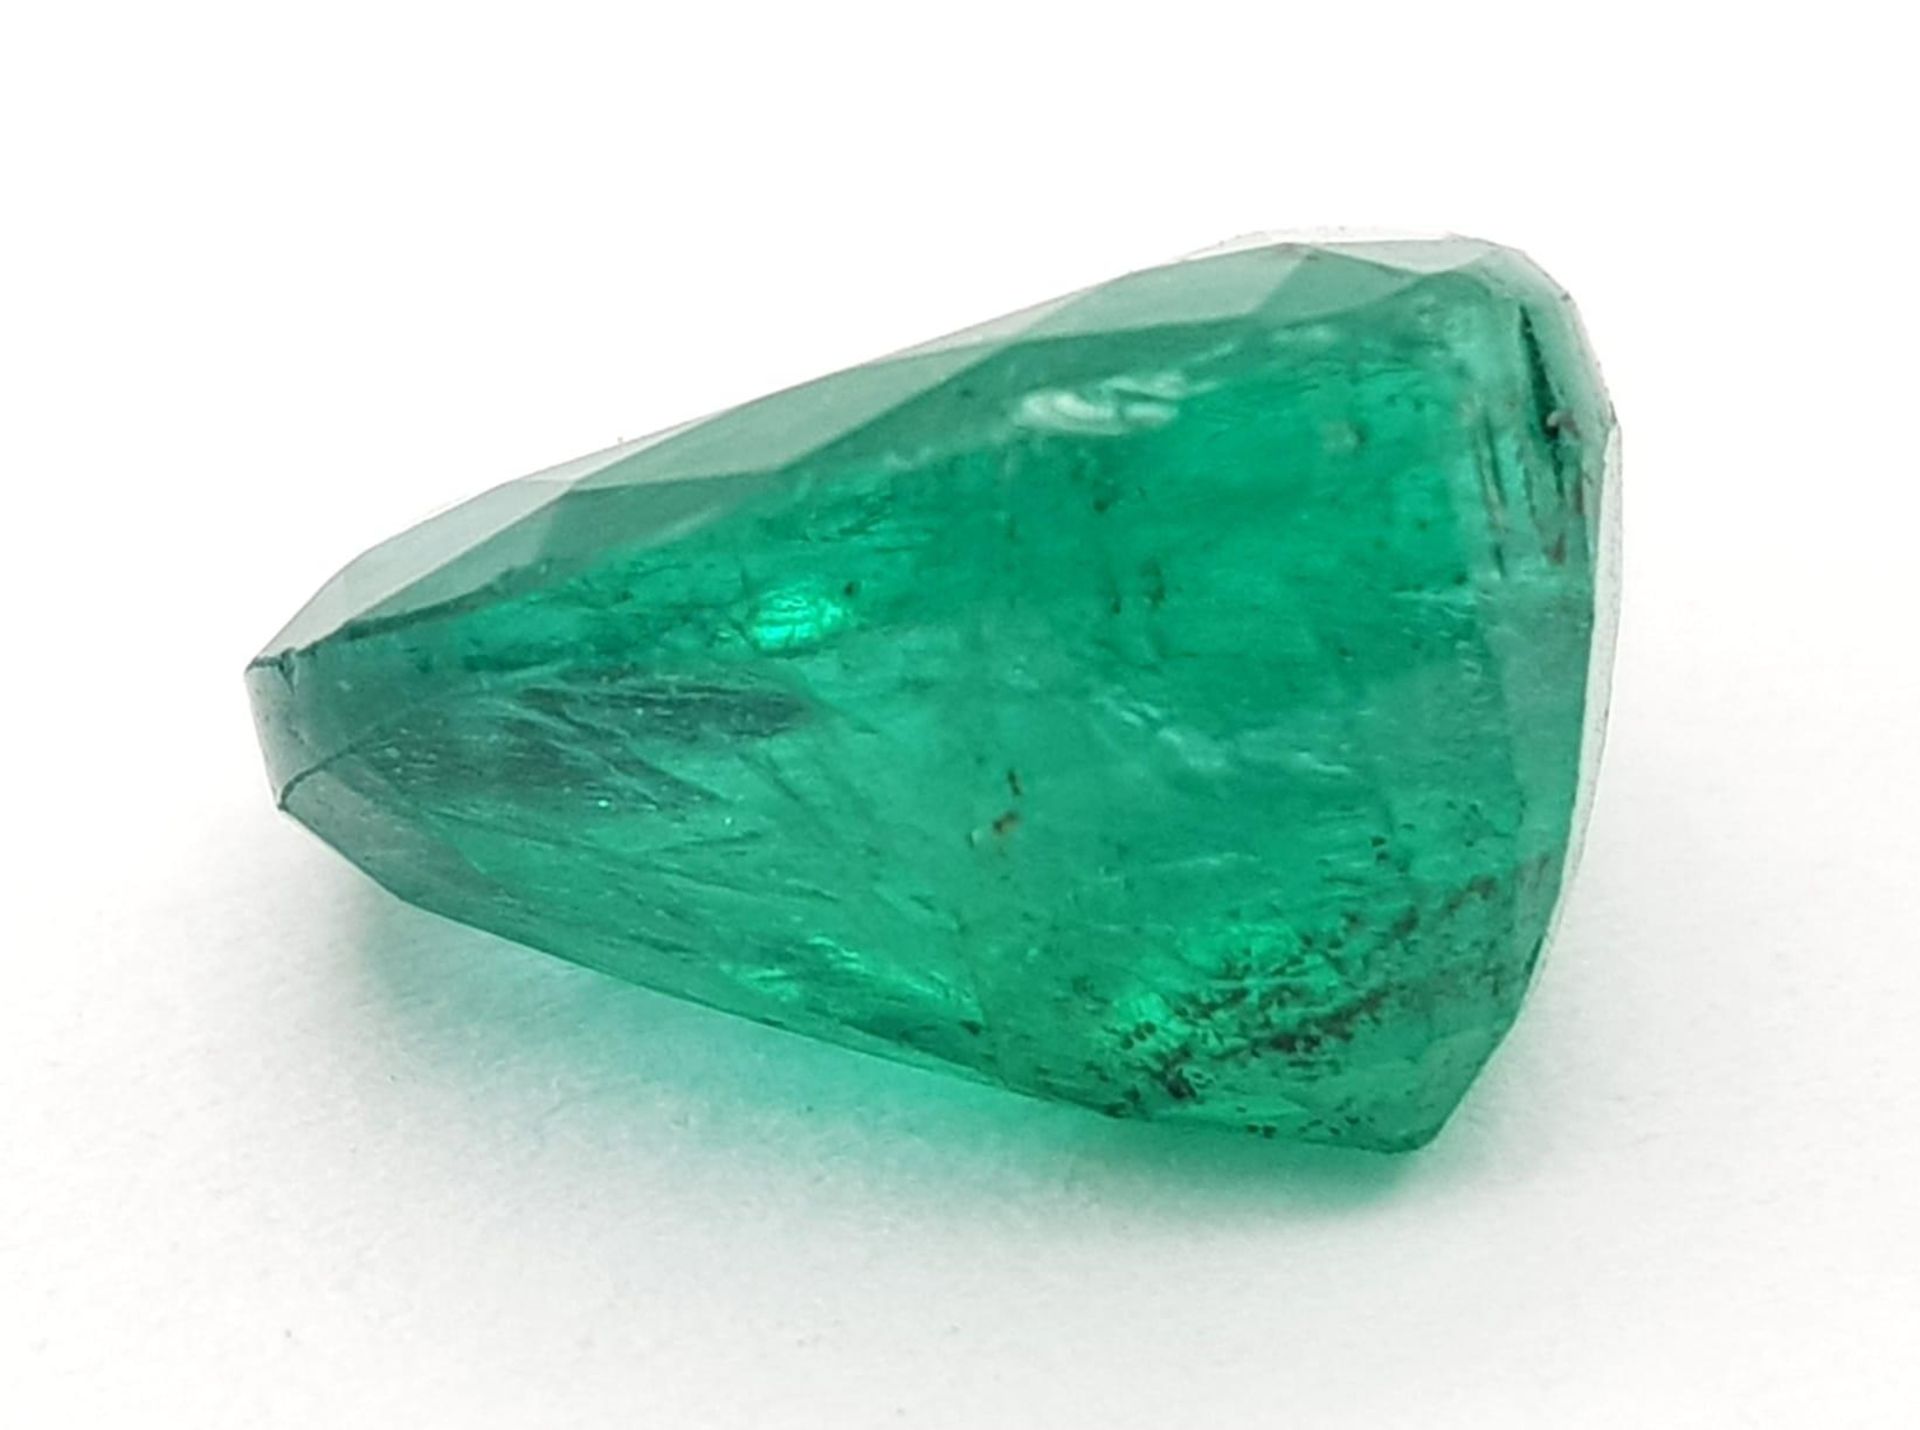 A 4.86ct Zambian Emerald - GTL certified. - Image 3 of 7